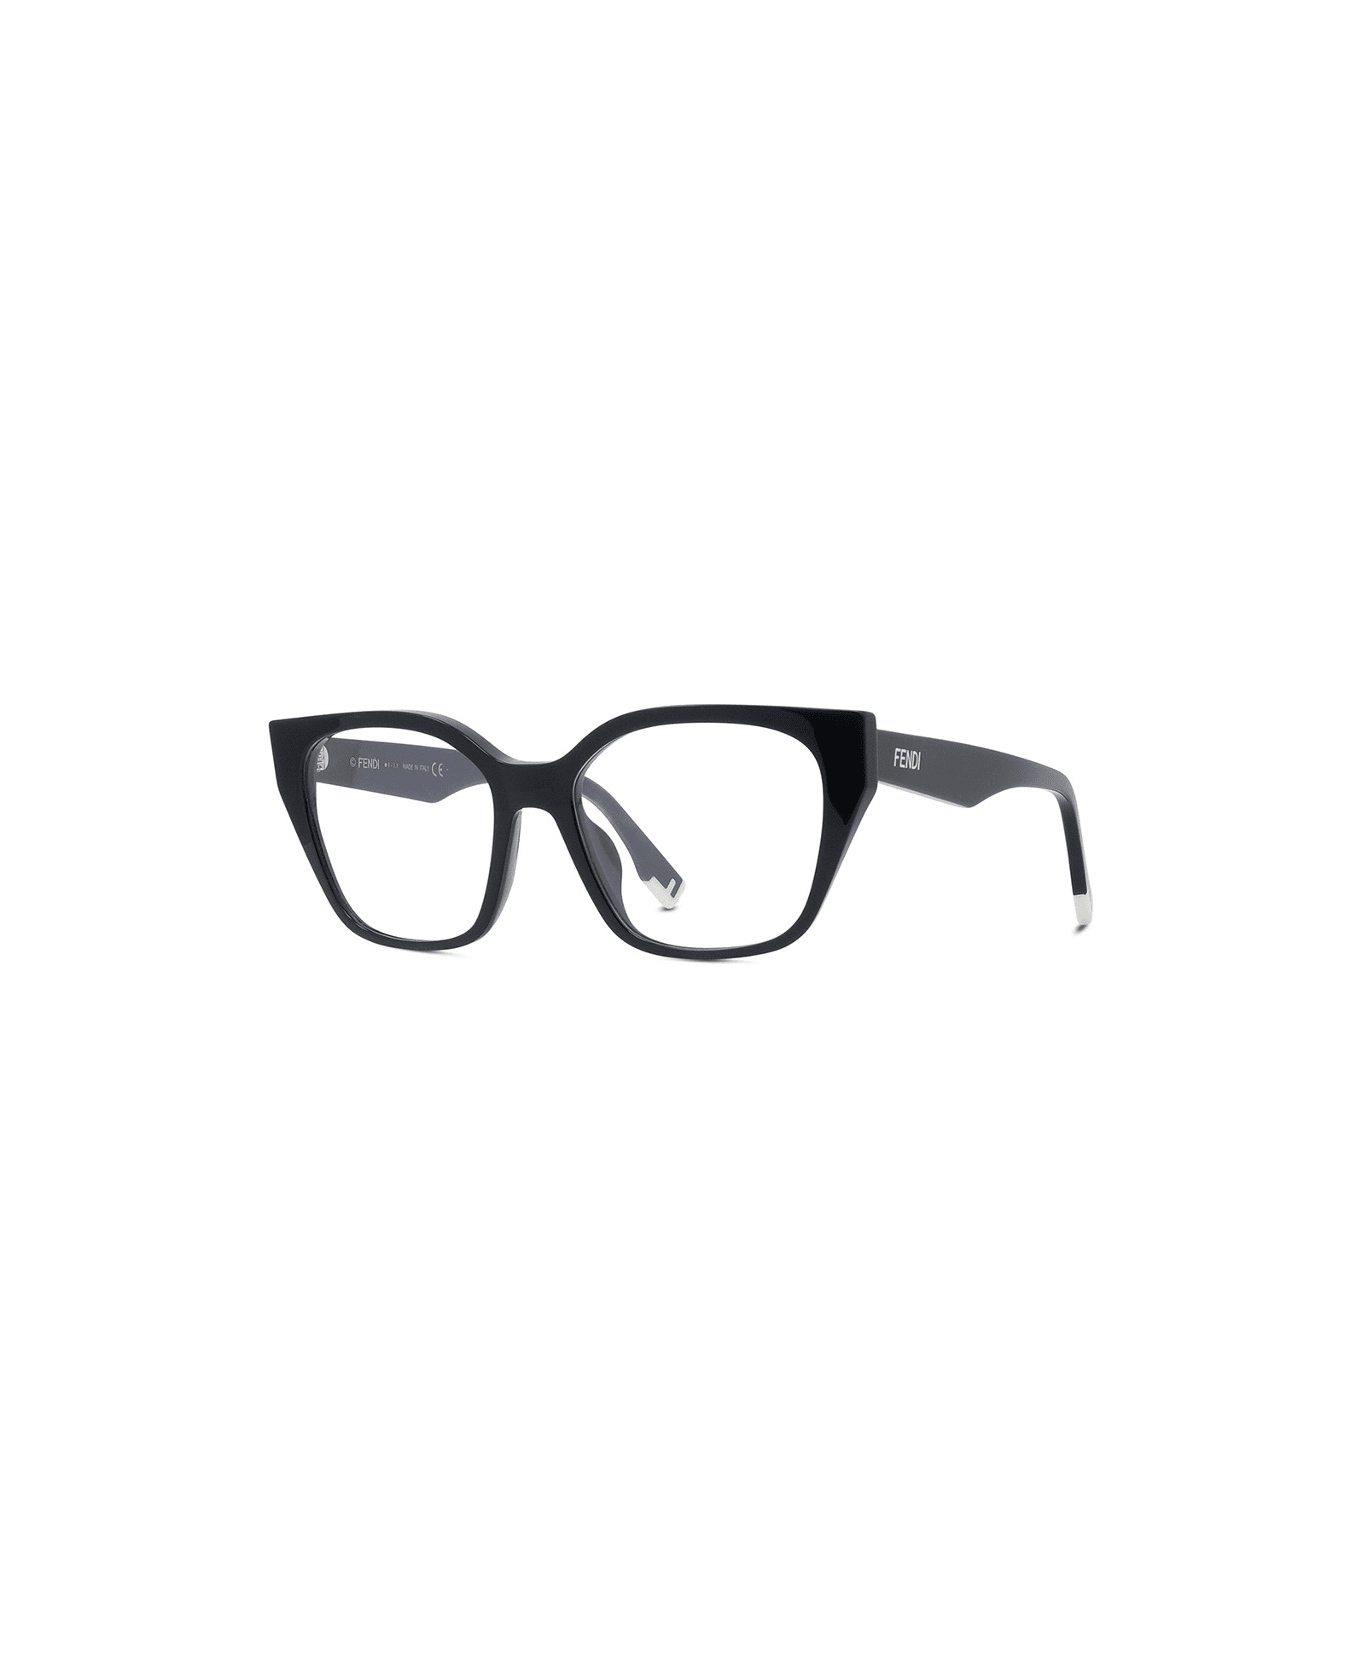 Fendi Eyewear FE50001i 001 Glasses - Nero